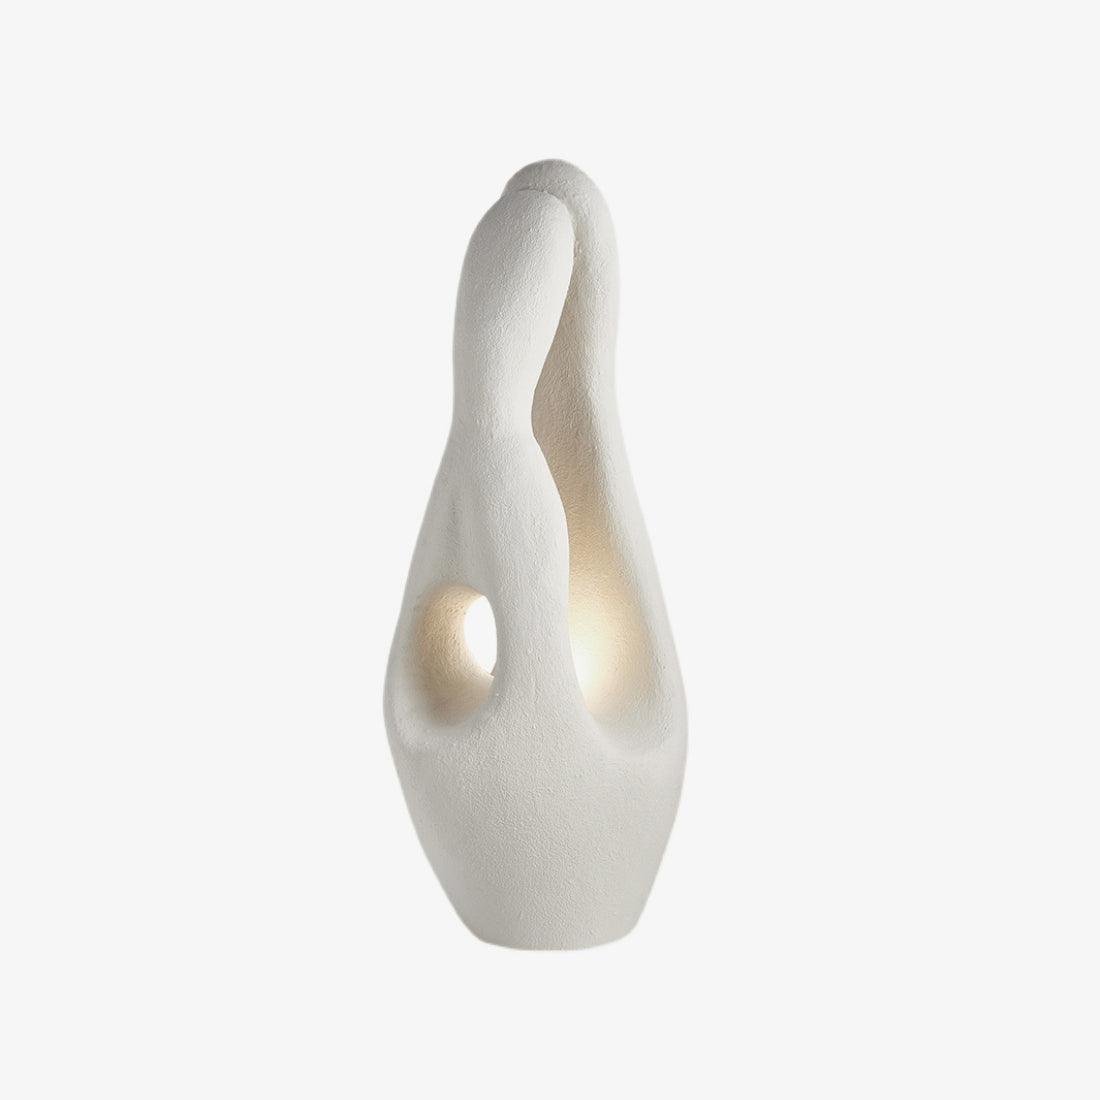 Fertility Form Floor Lamp in White, with UK plug, measuring ∅ 19.7″ x H 52″ (Dia 50cm x H 132cm)